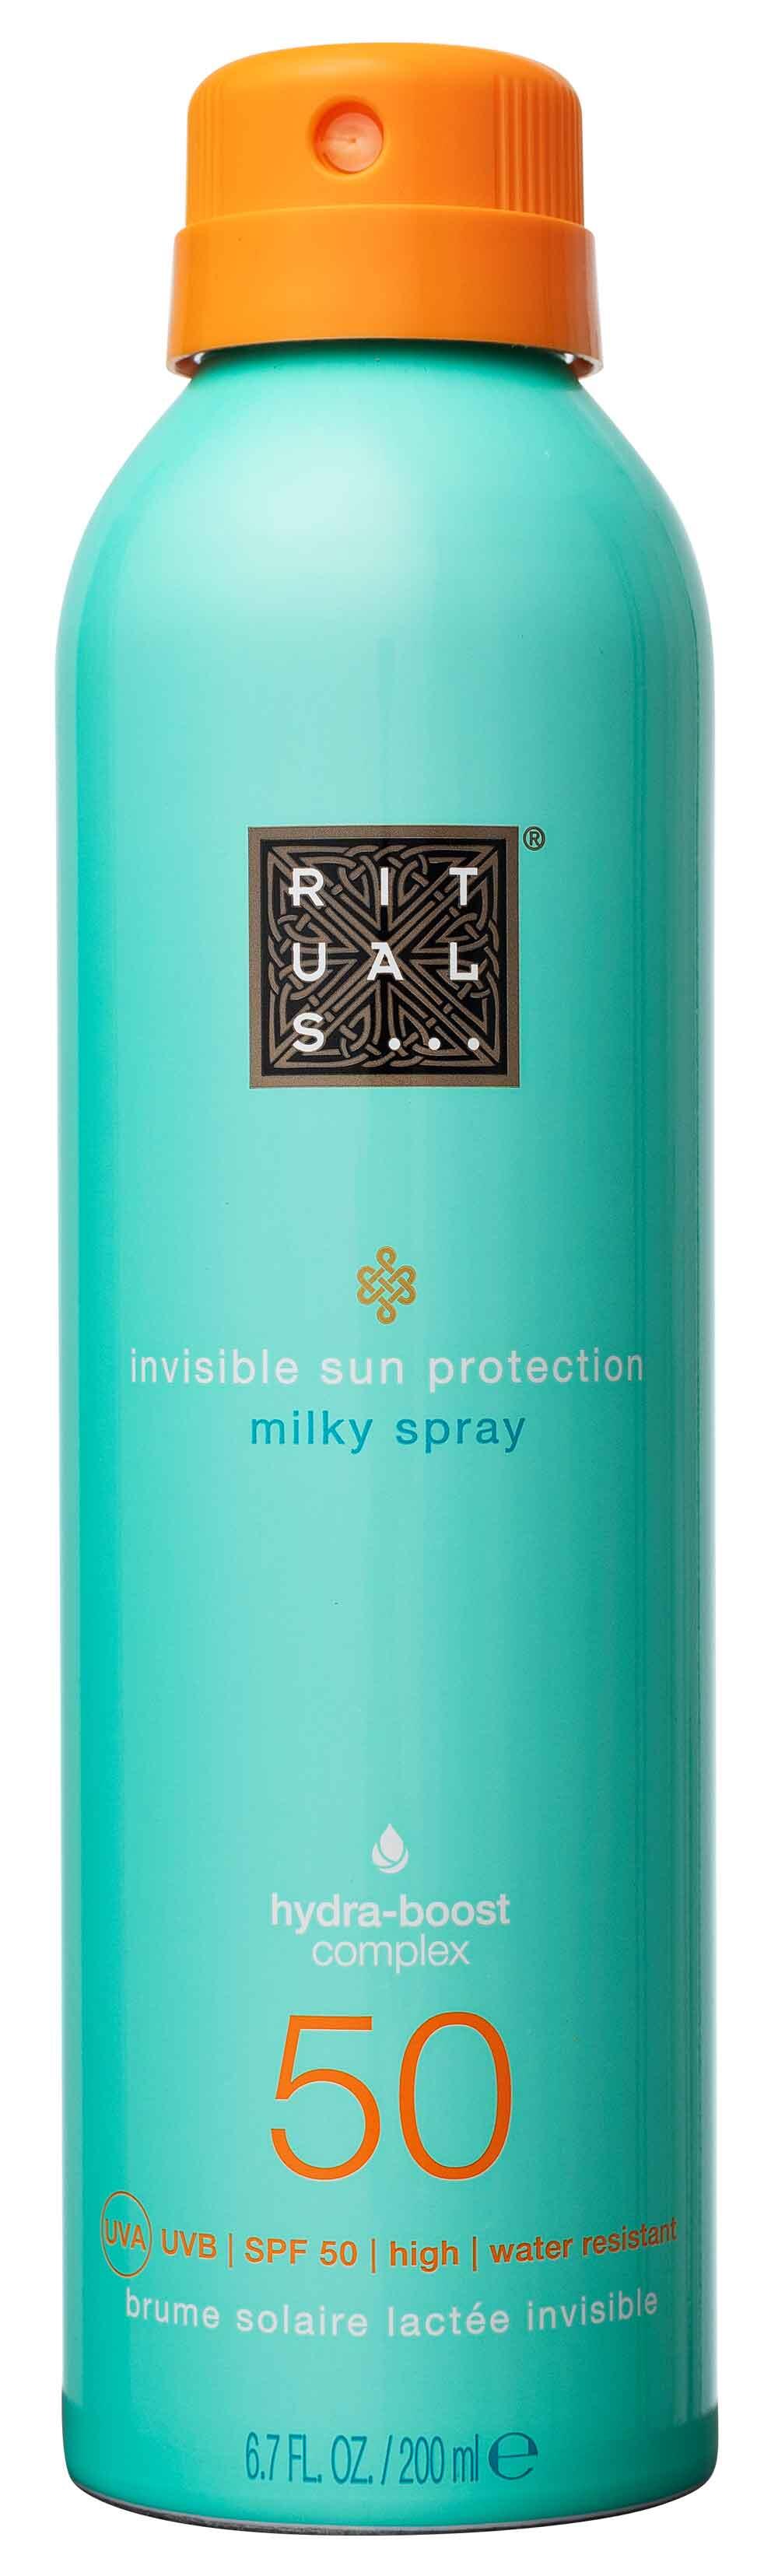 Invisible sun protection milky spray spf 50 Rituals